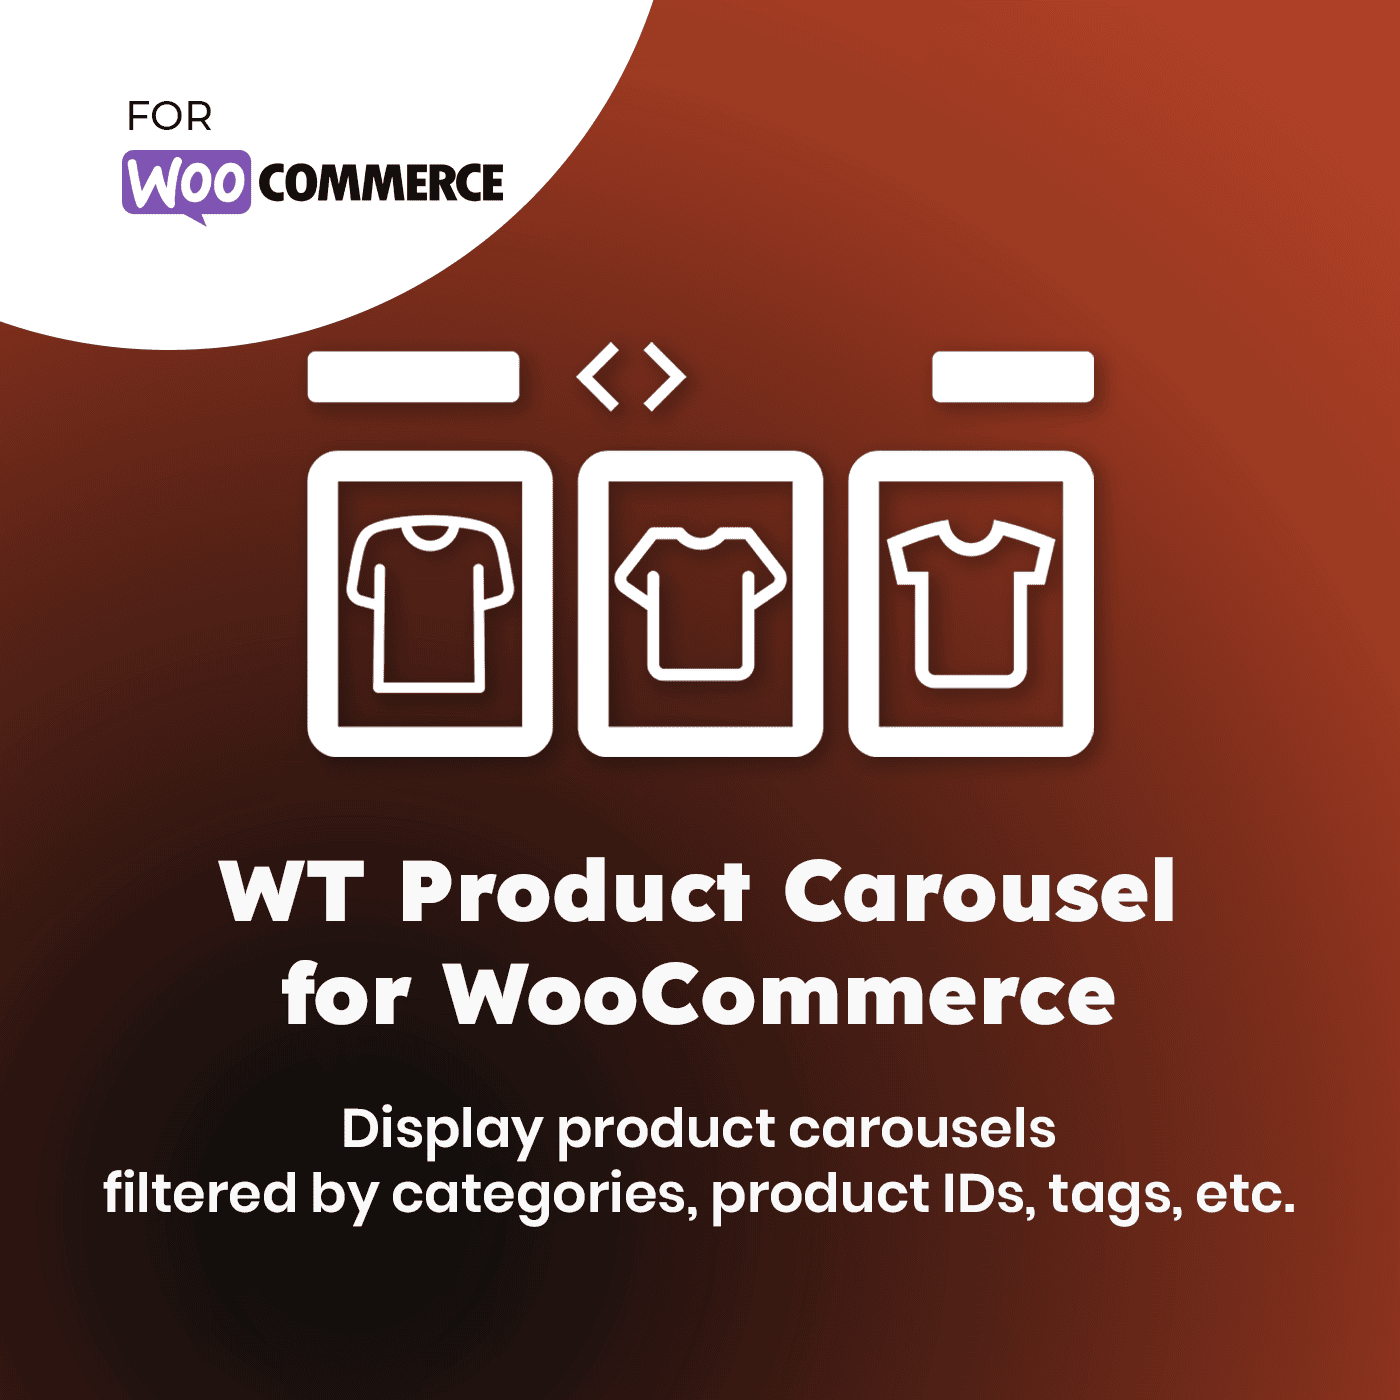 WT Product Carousel for WooCommerce - WordPress Plugin for WooCommerce